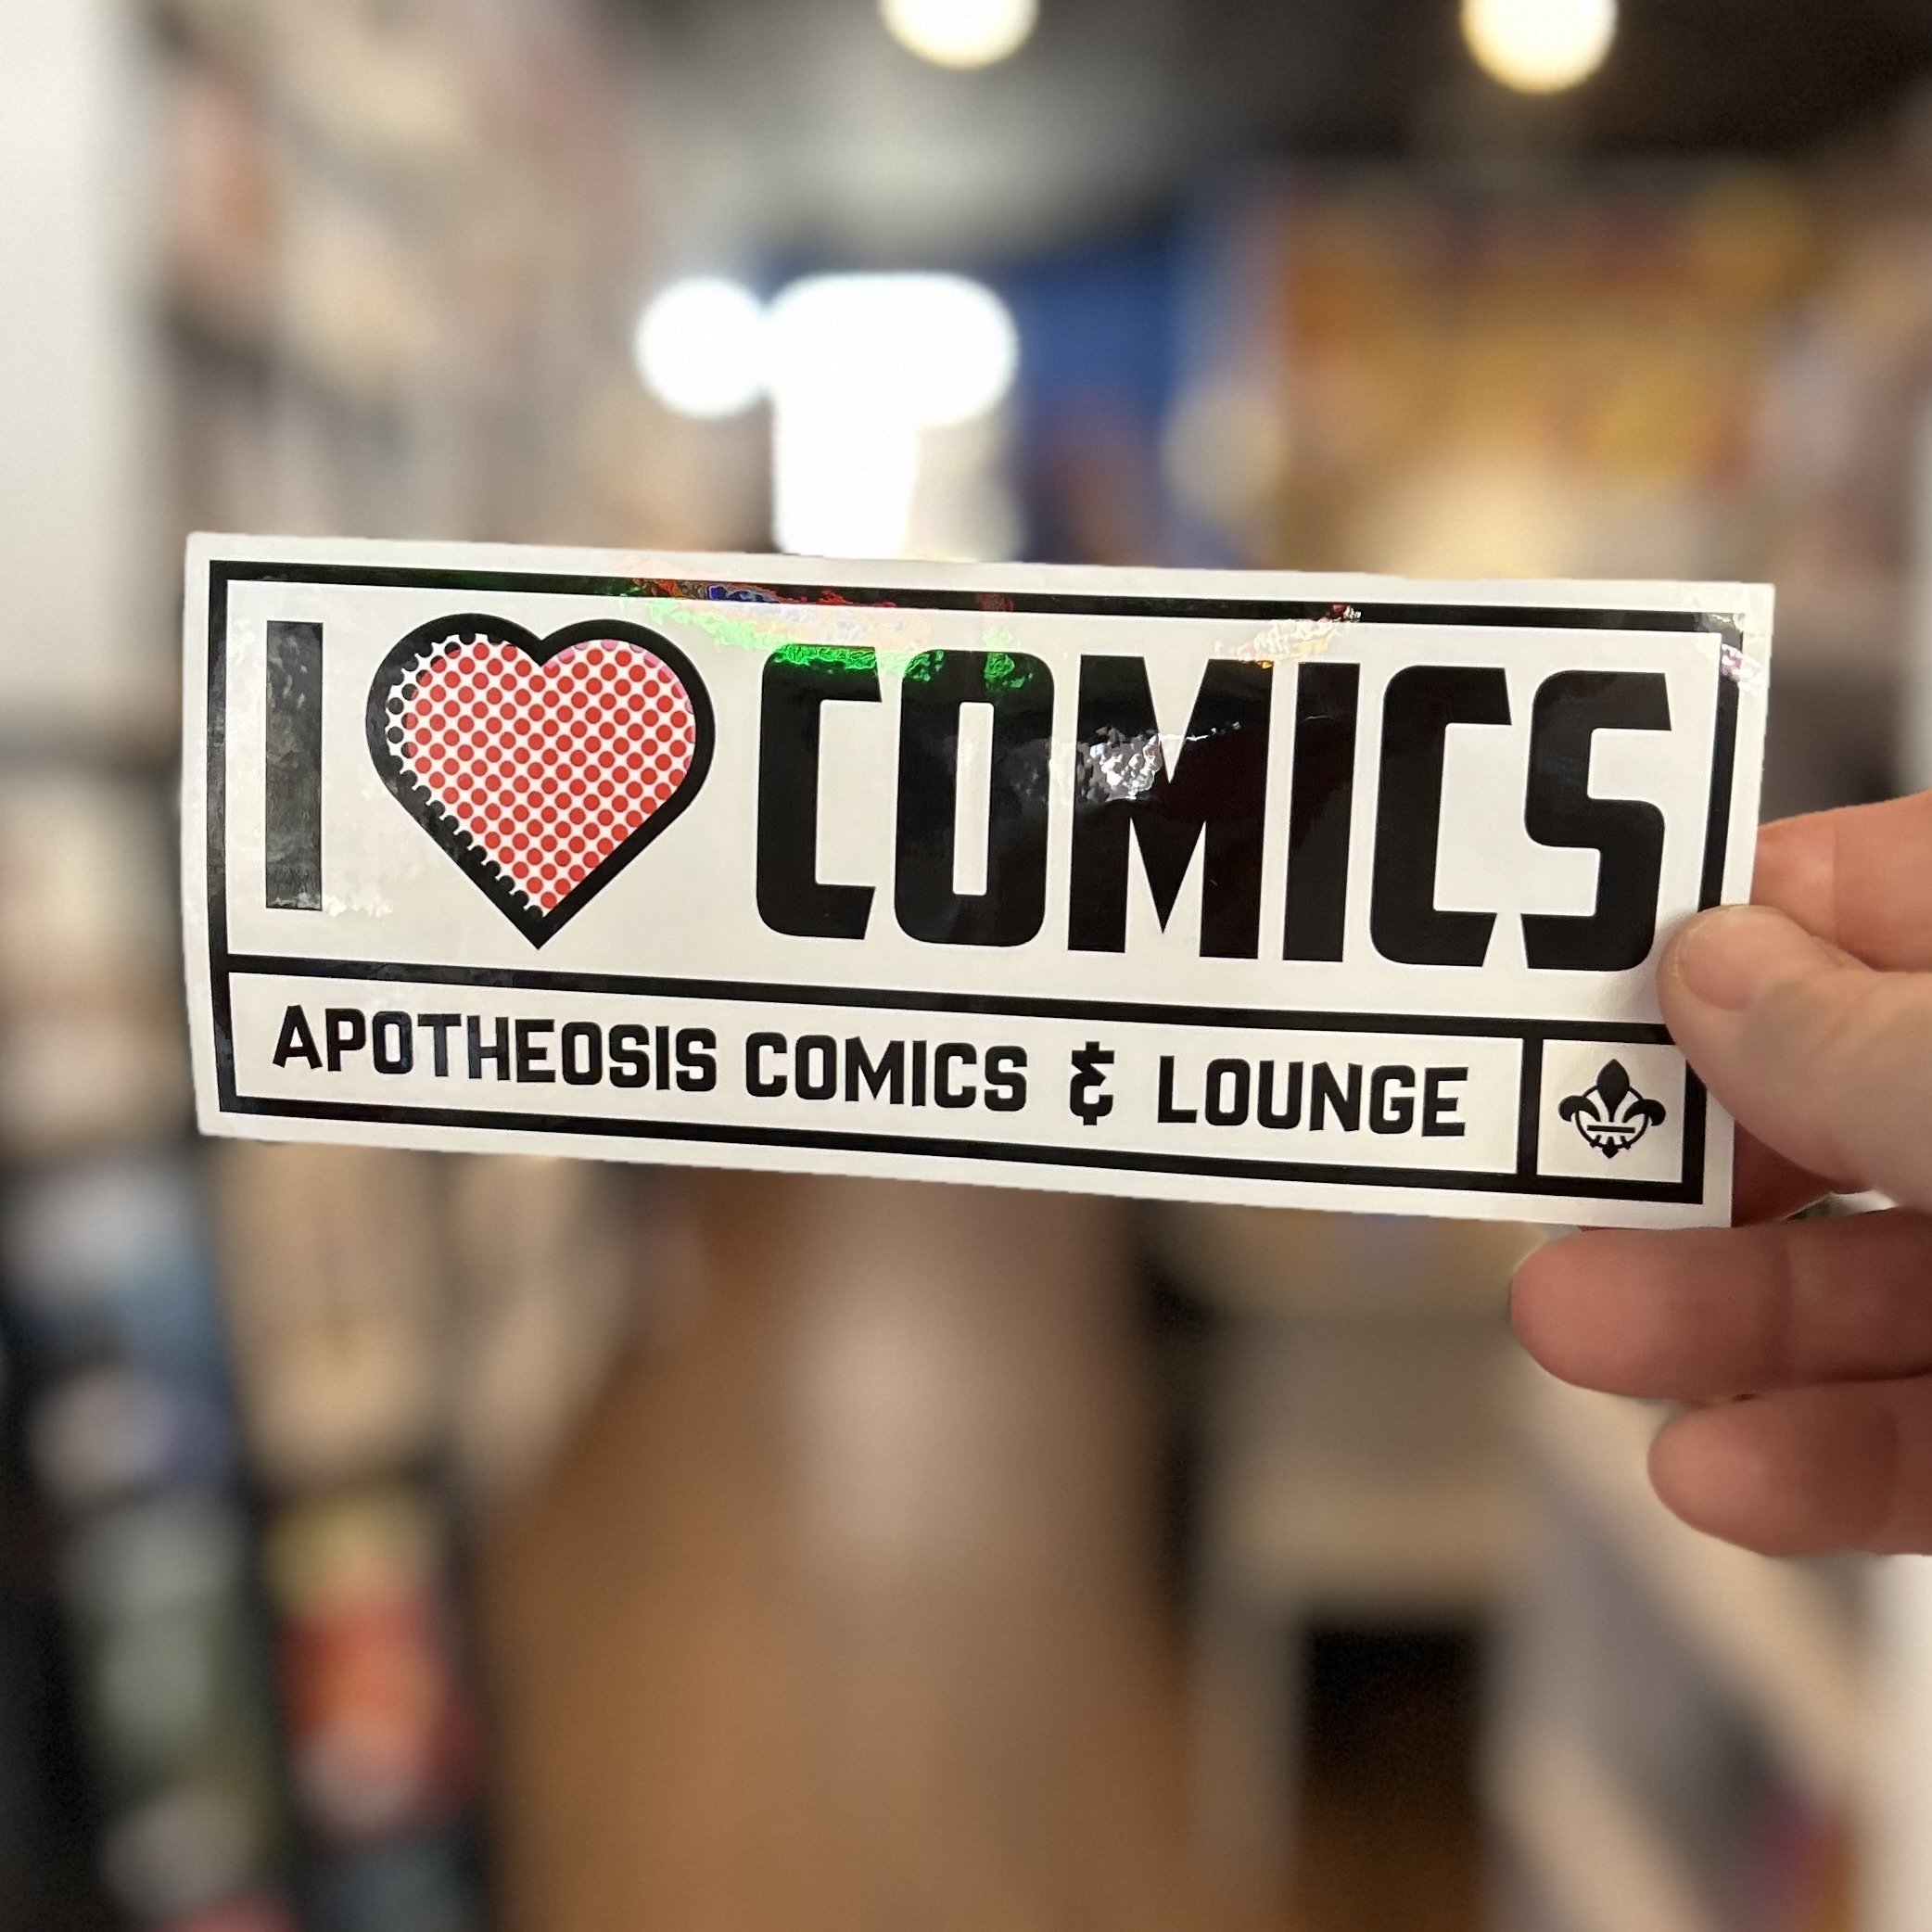 Apoth i love comics sticker.jpeg